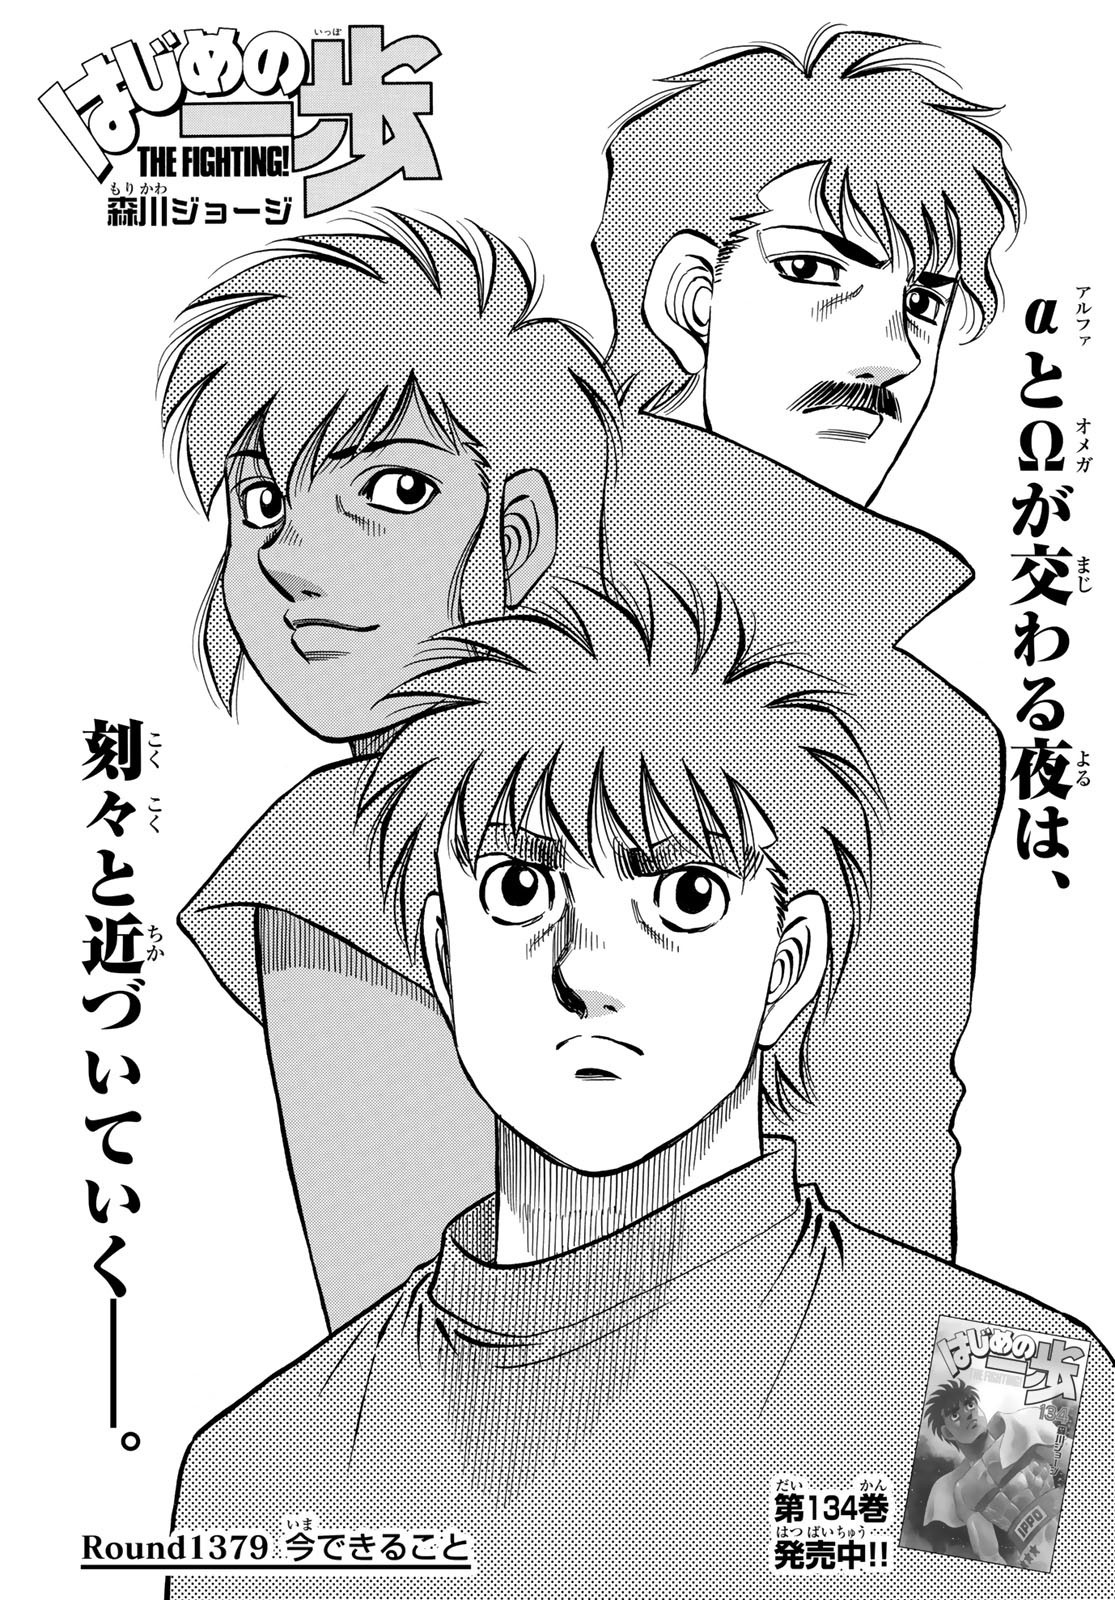 Hajime no Ippo - Chapter 1379 - Page 1